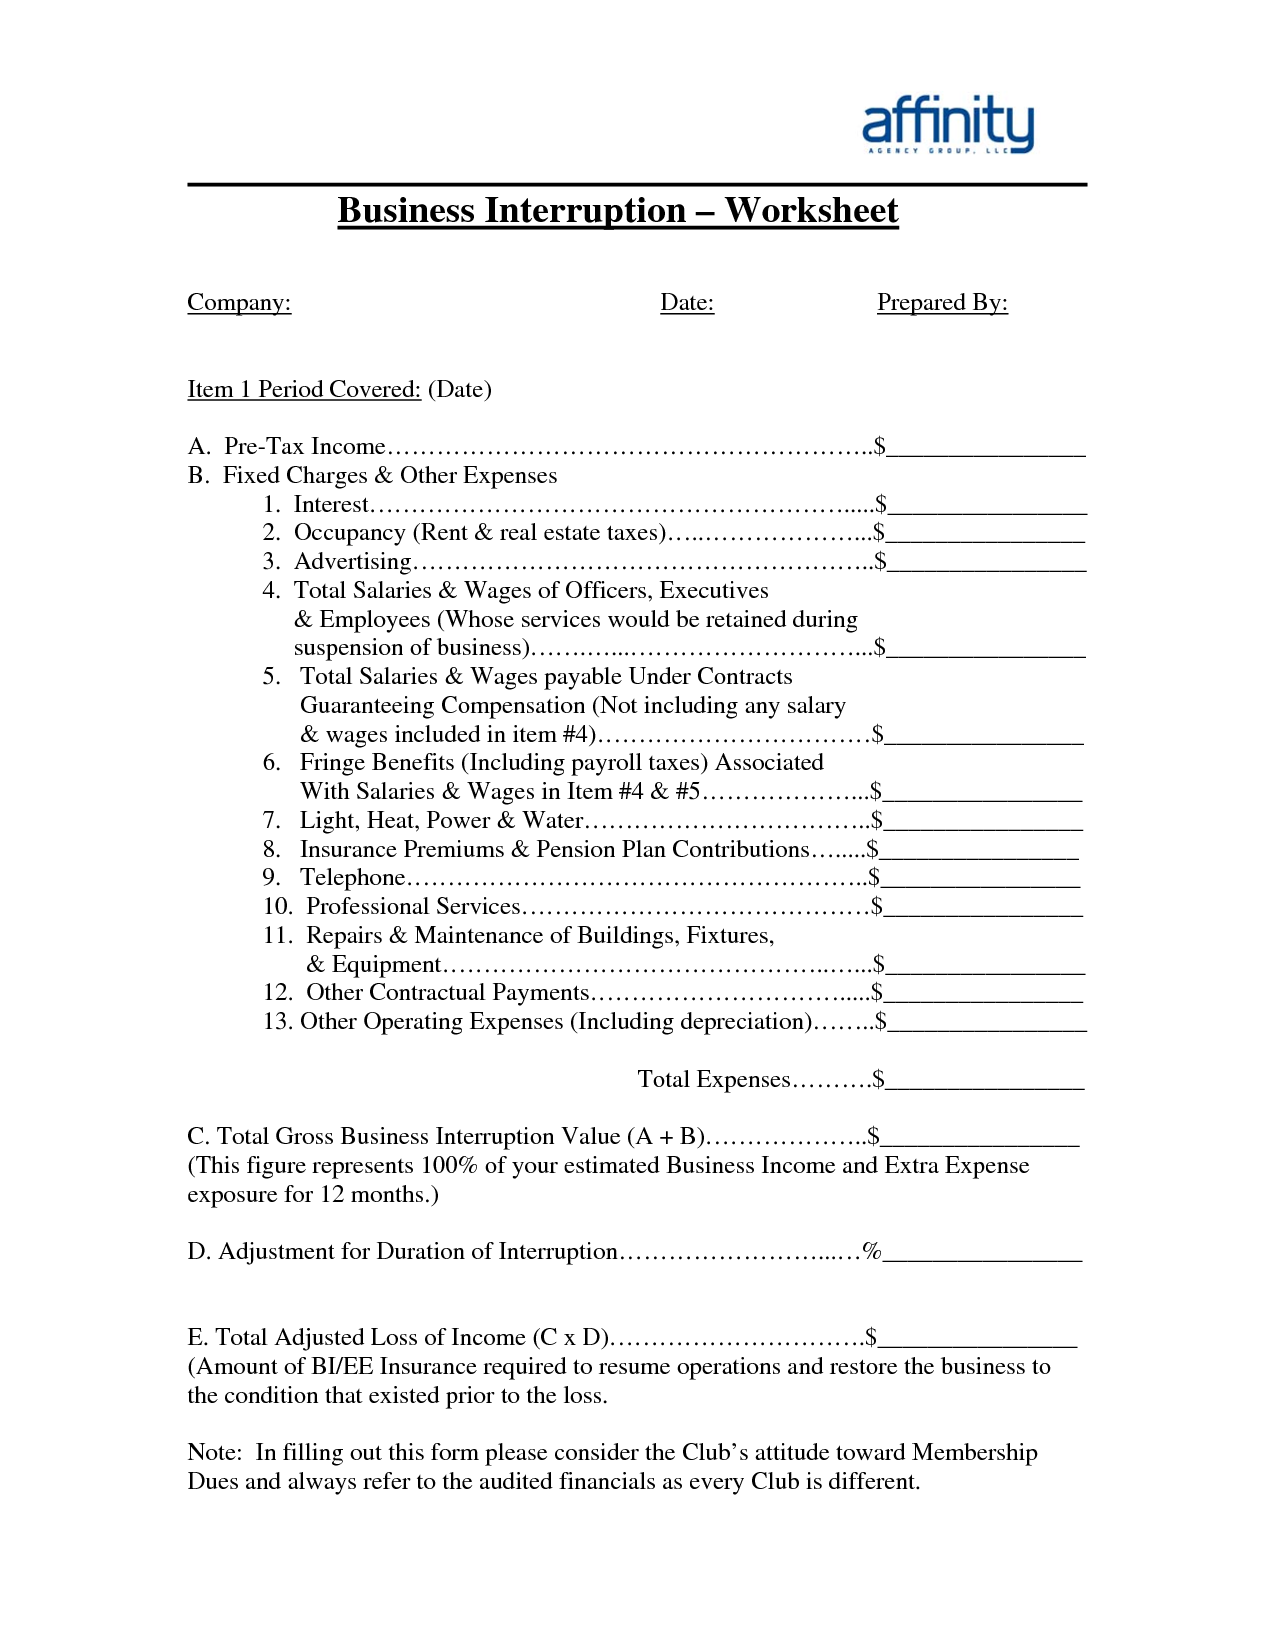 Business Interruption Insurance Worksheet